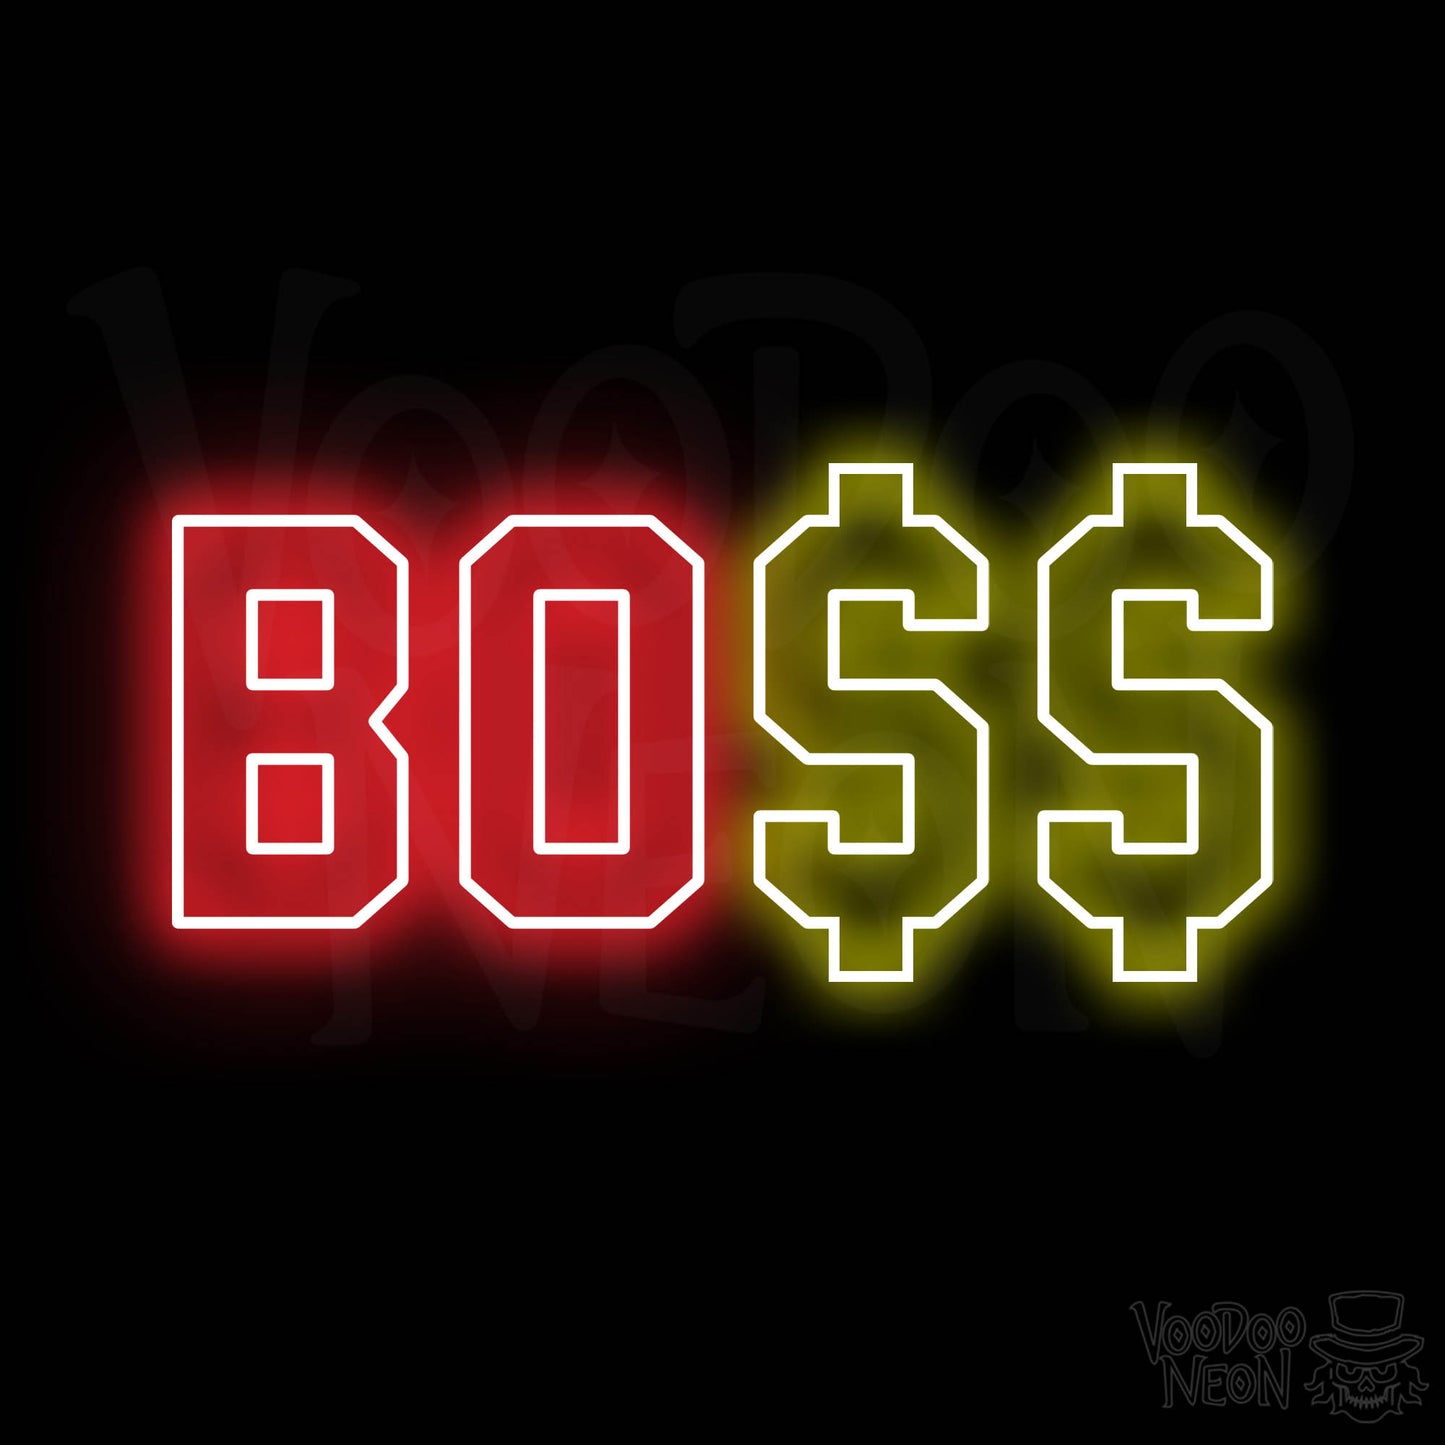 Boss LED Neon - Multi-Color